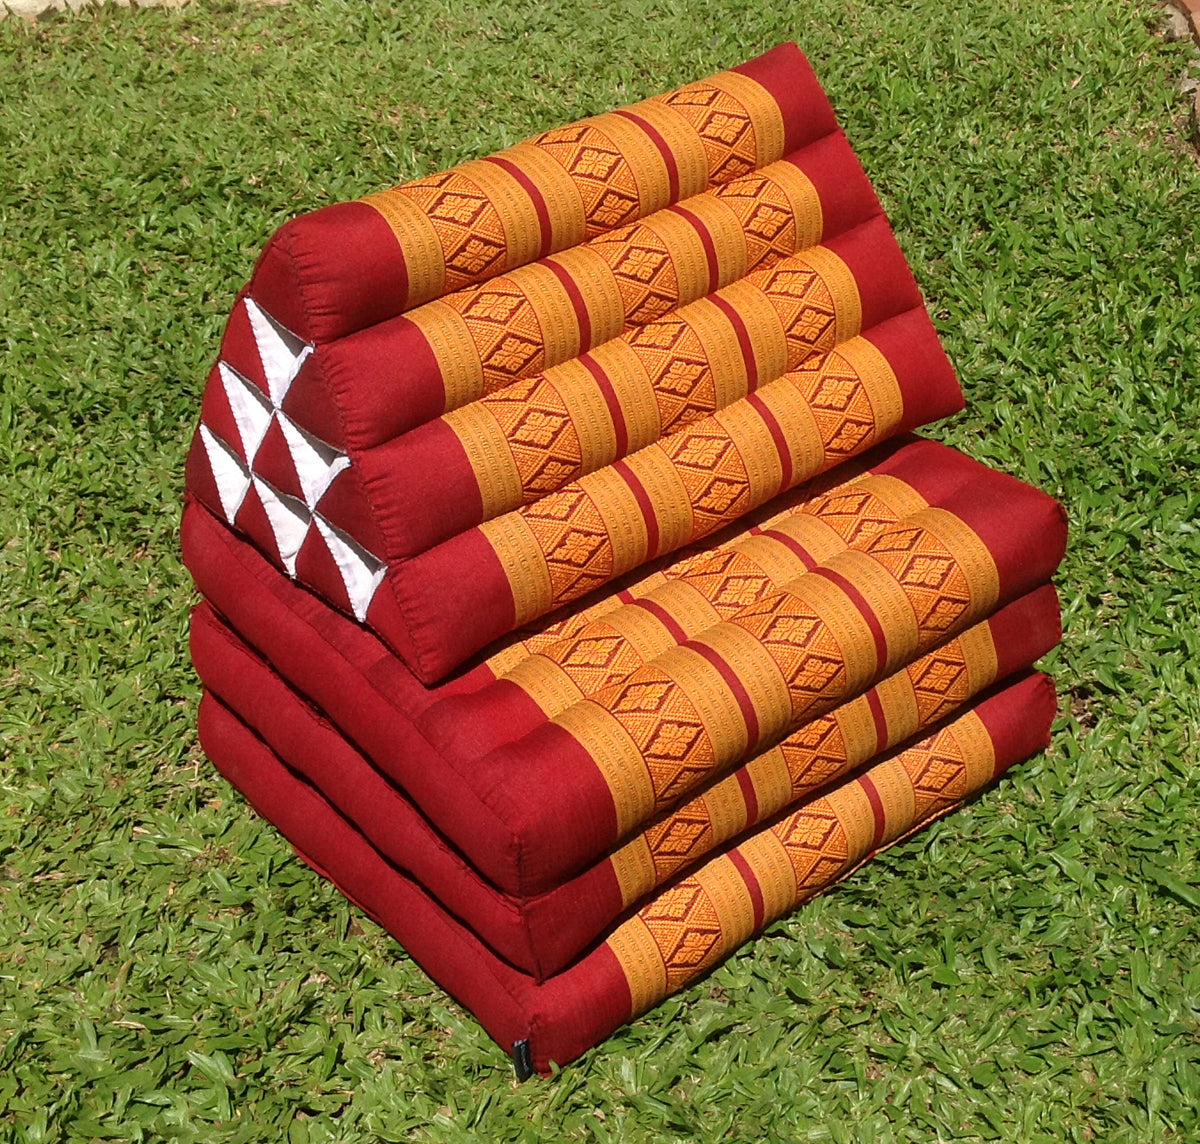 Thai Kapok 3 Fold Mattress with Triangle Cushion (Copper Burgundy)